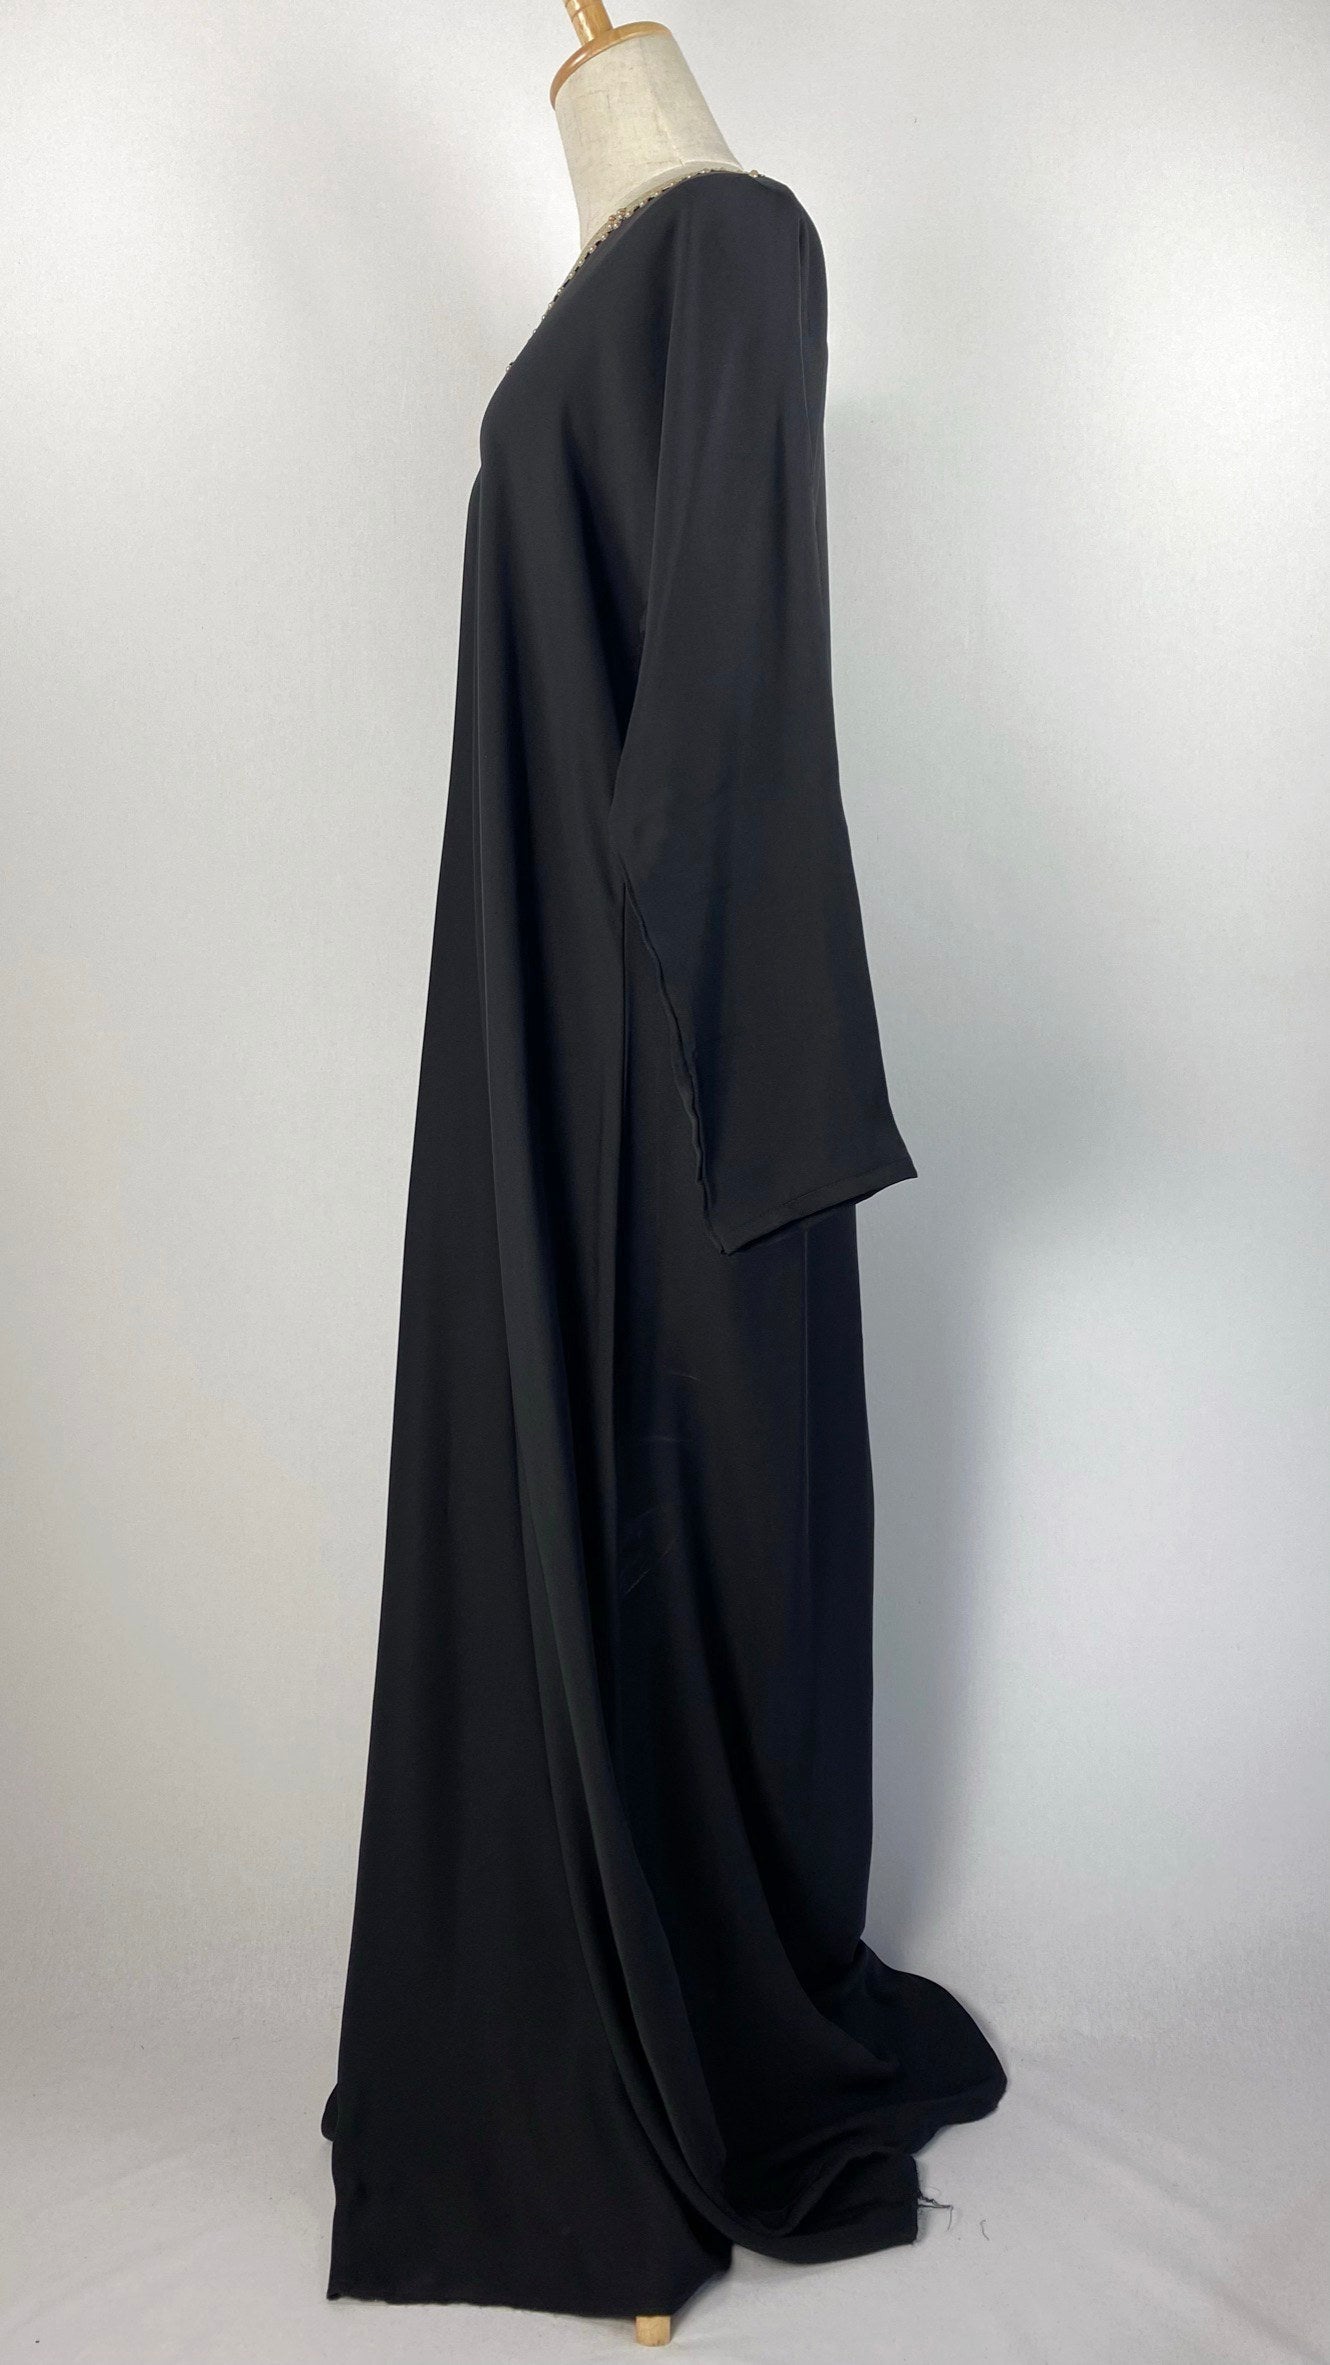 Long Sleeve Closed Abaya with Pearl Detail, Black